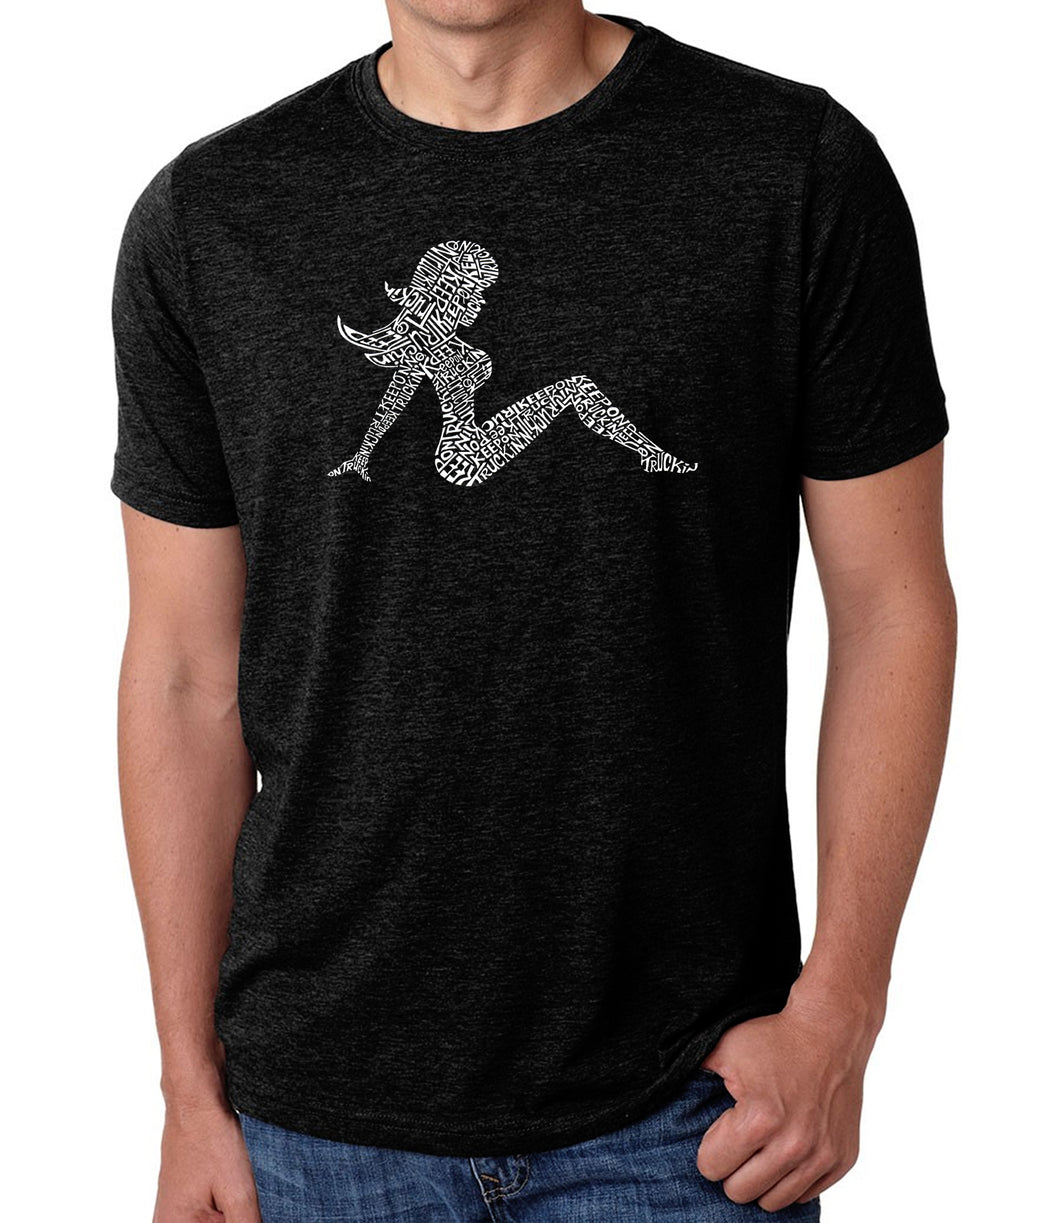 Mudflap Girl Keep on Truckin - Men's Premium Blend Word Art T-Shirt